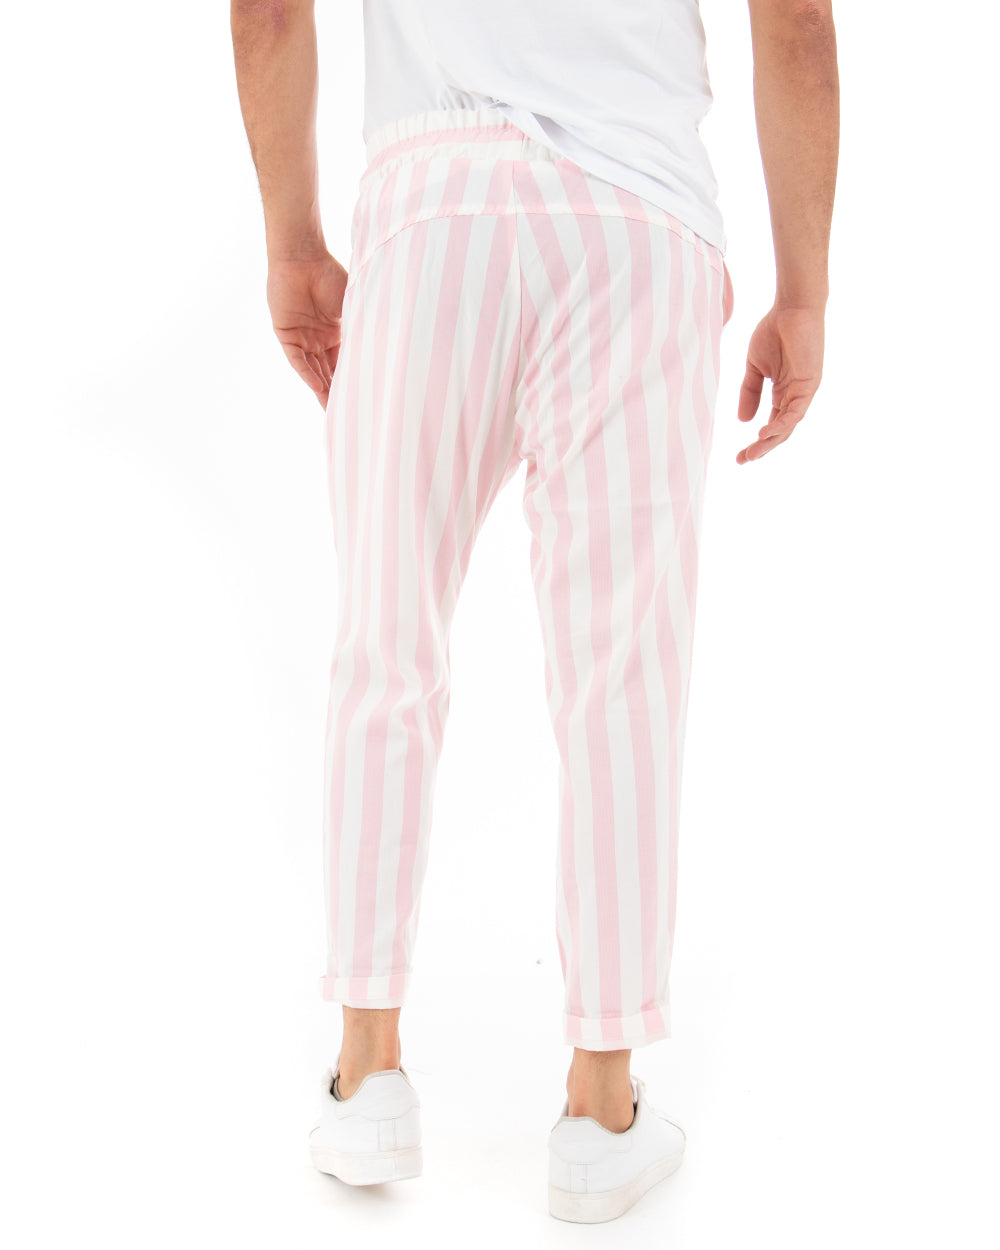 Paul Barrell Men's Long Trousers Pink Striped Elastic Drawstring Cotton GIOSAL